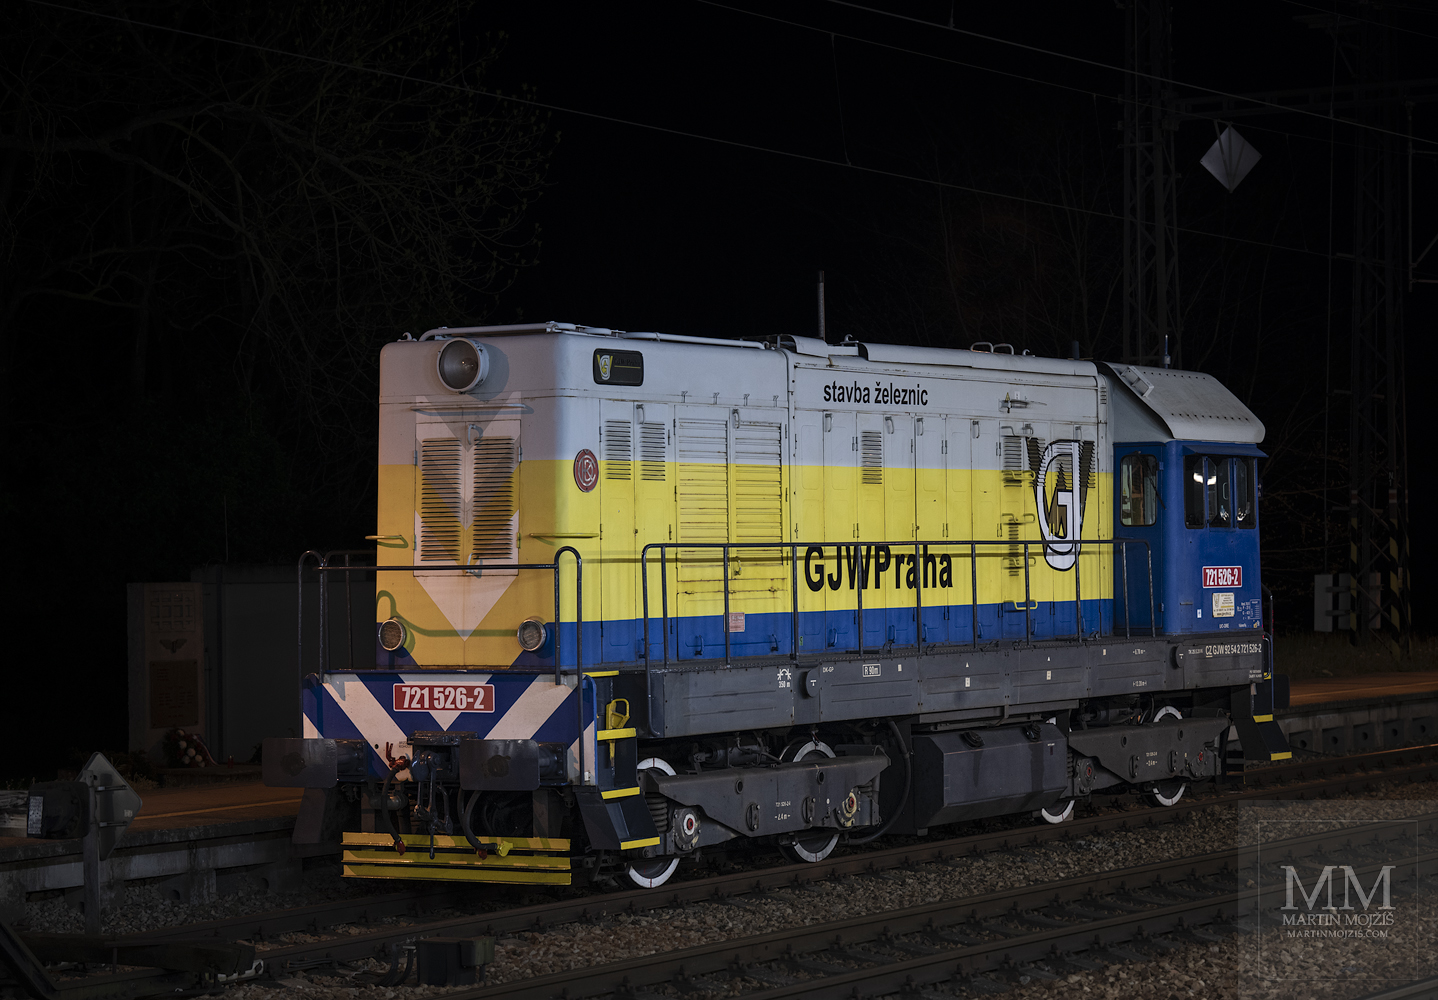 Locomotive 721 526-2 at the station at night.